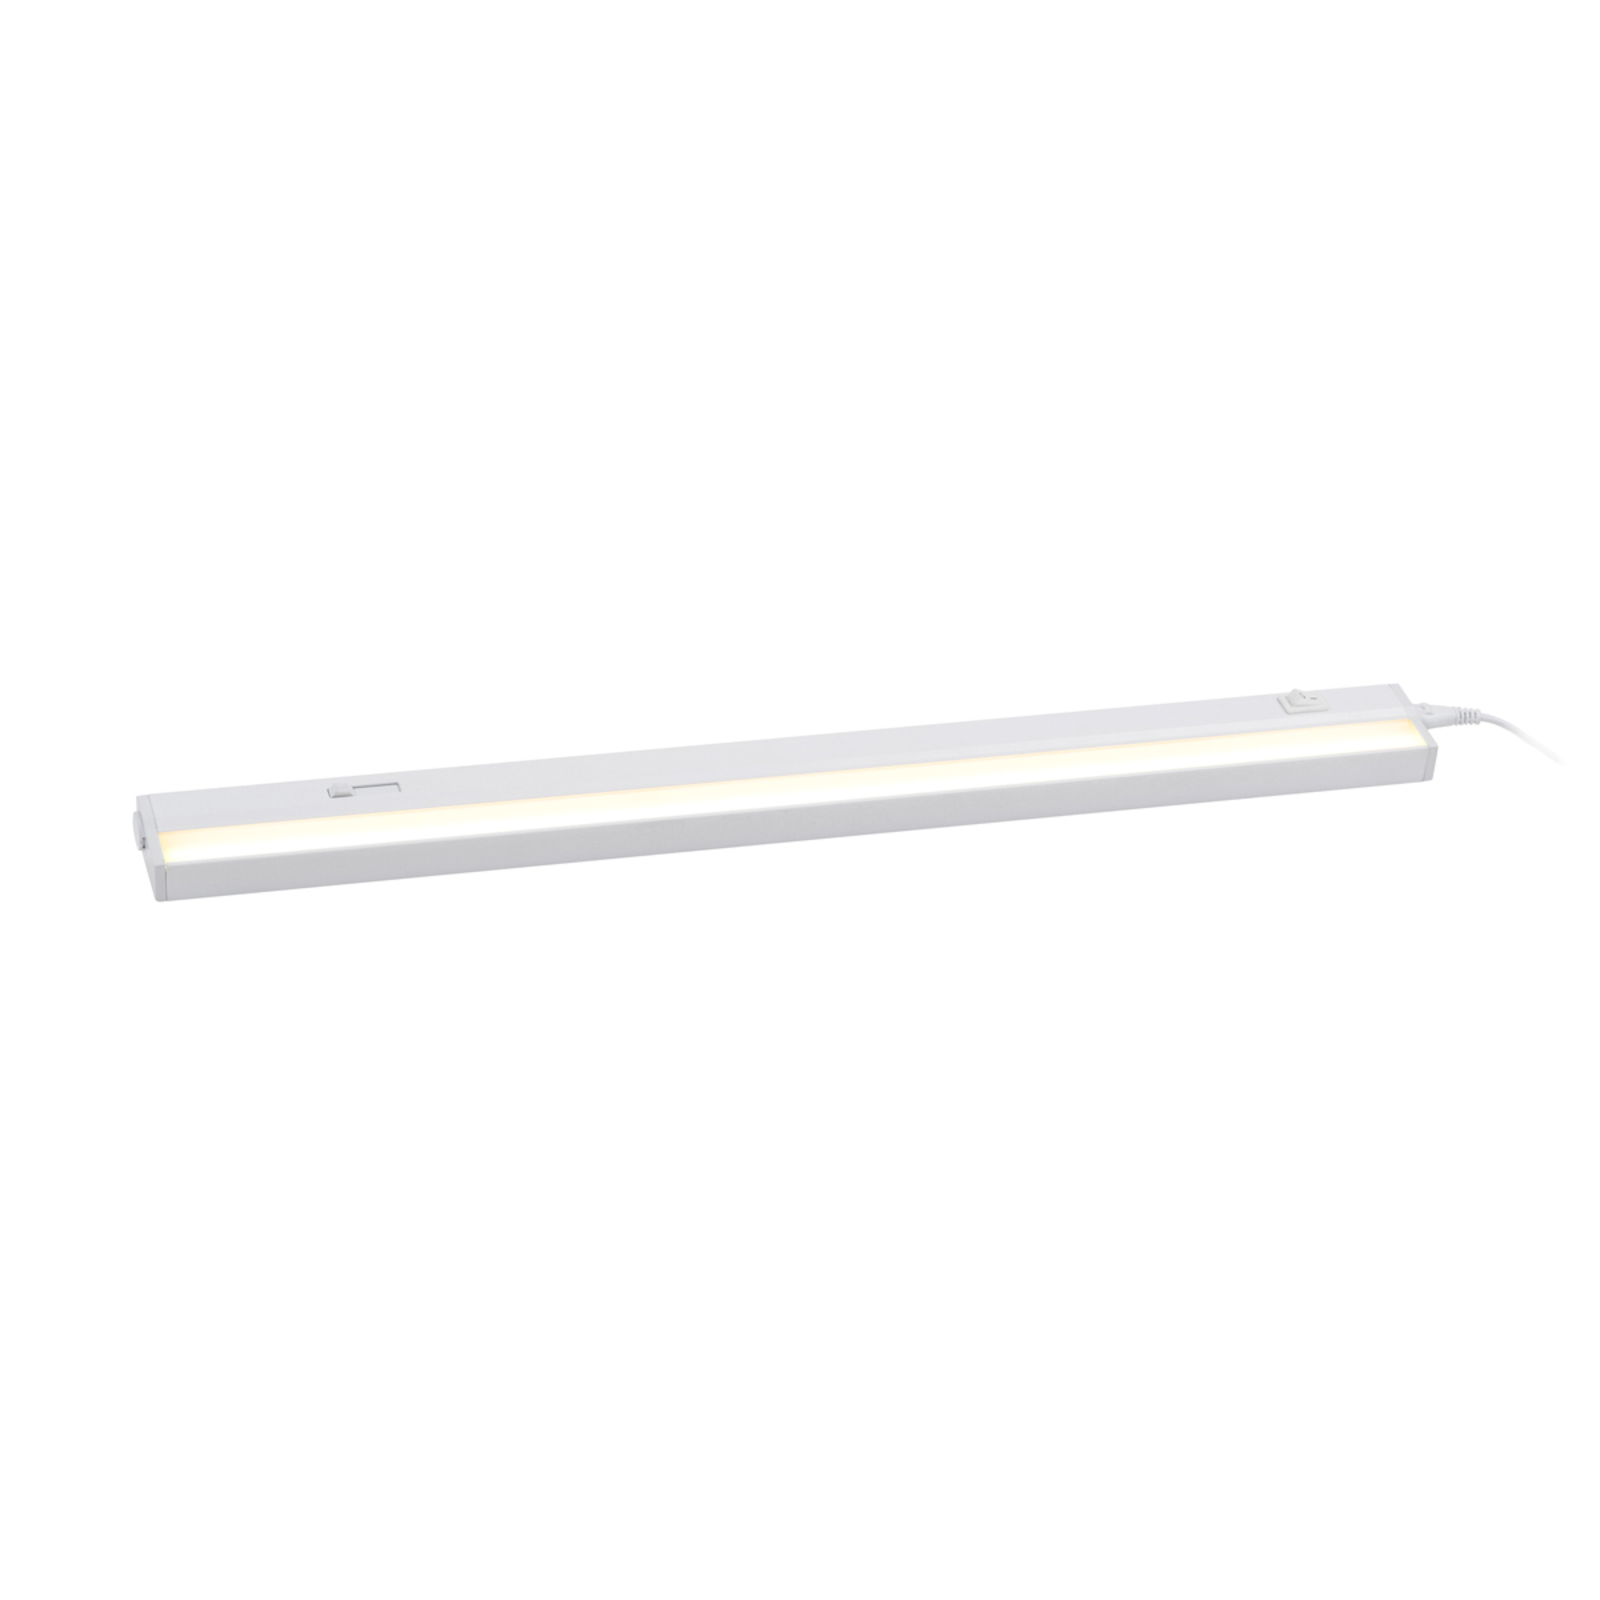 LED-skåplampa Cabinet light längd 42,4 cm